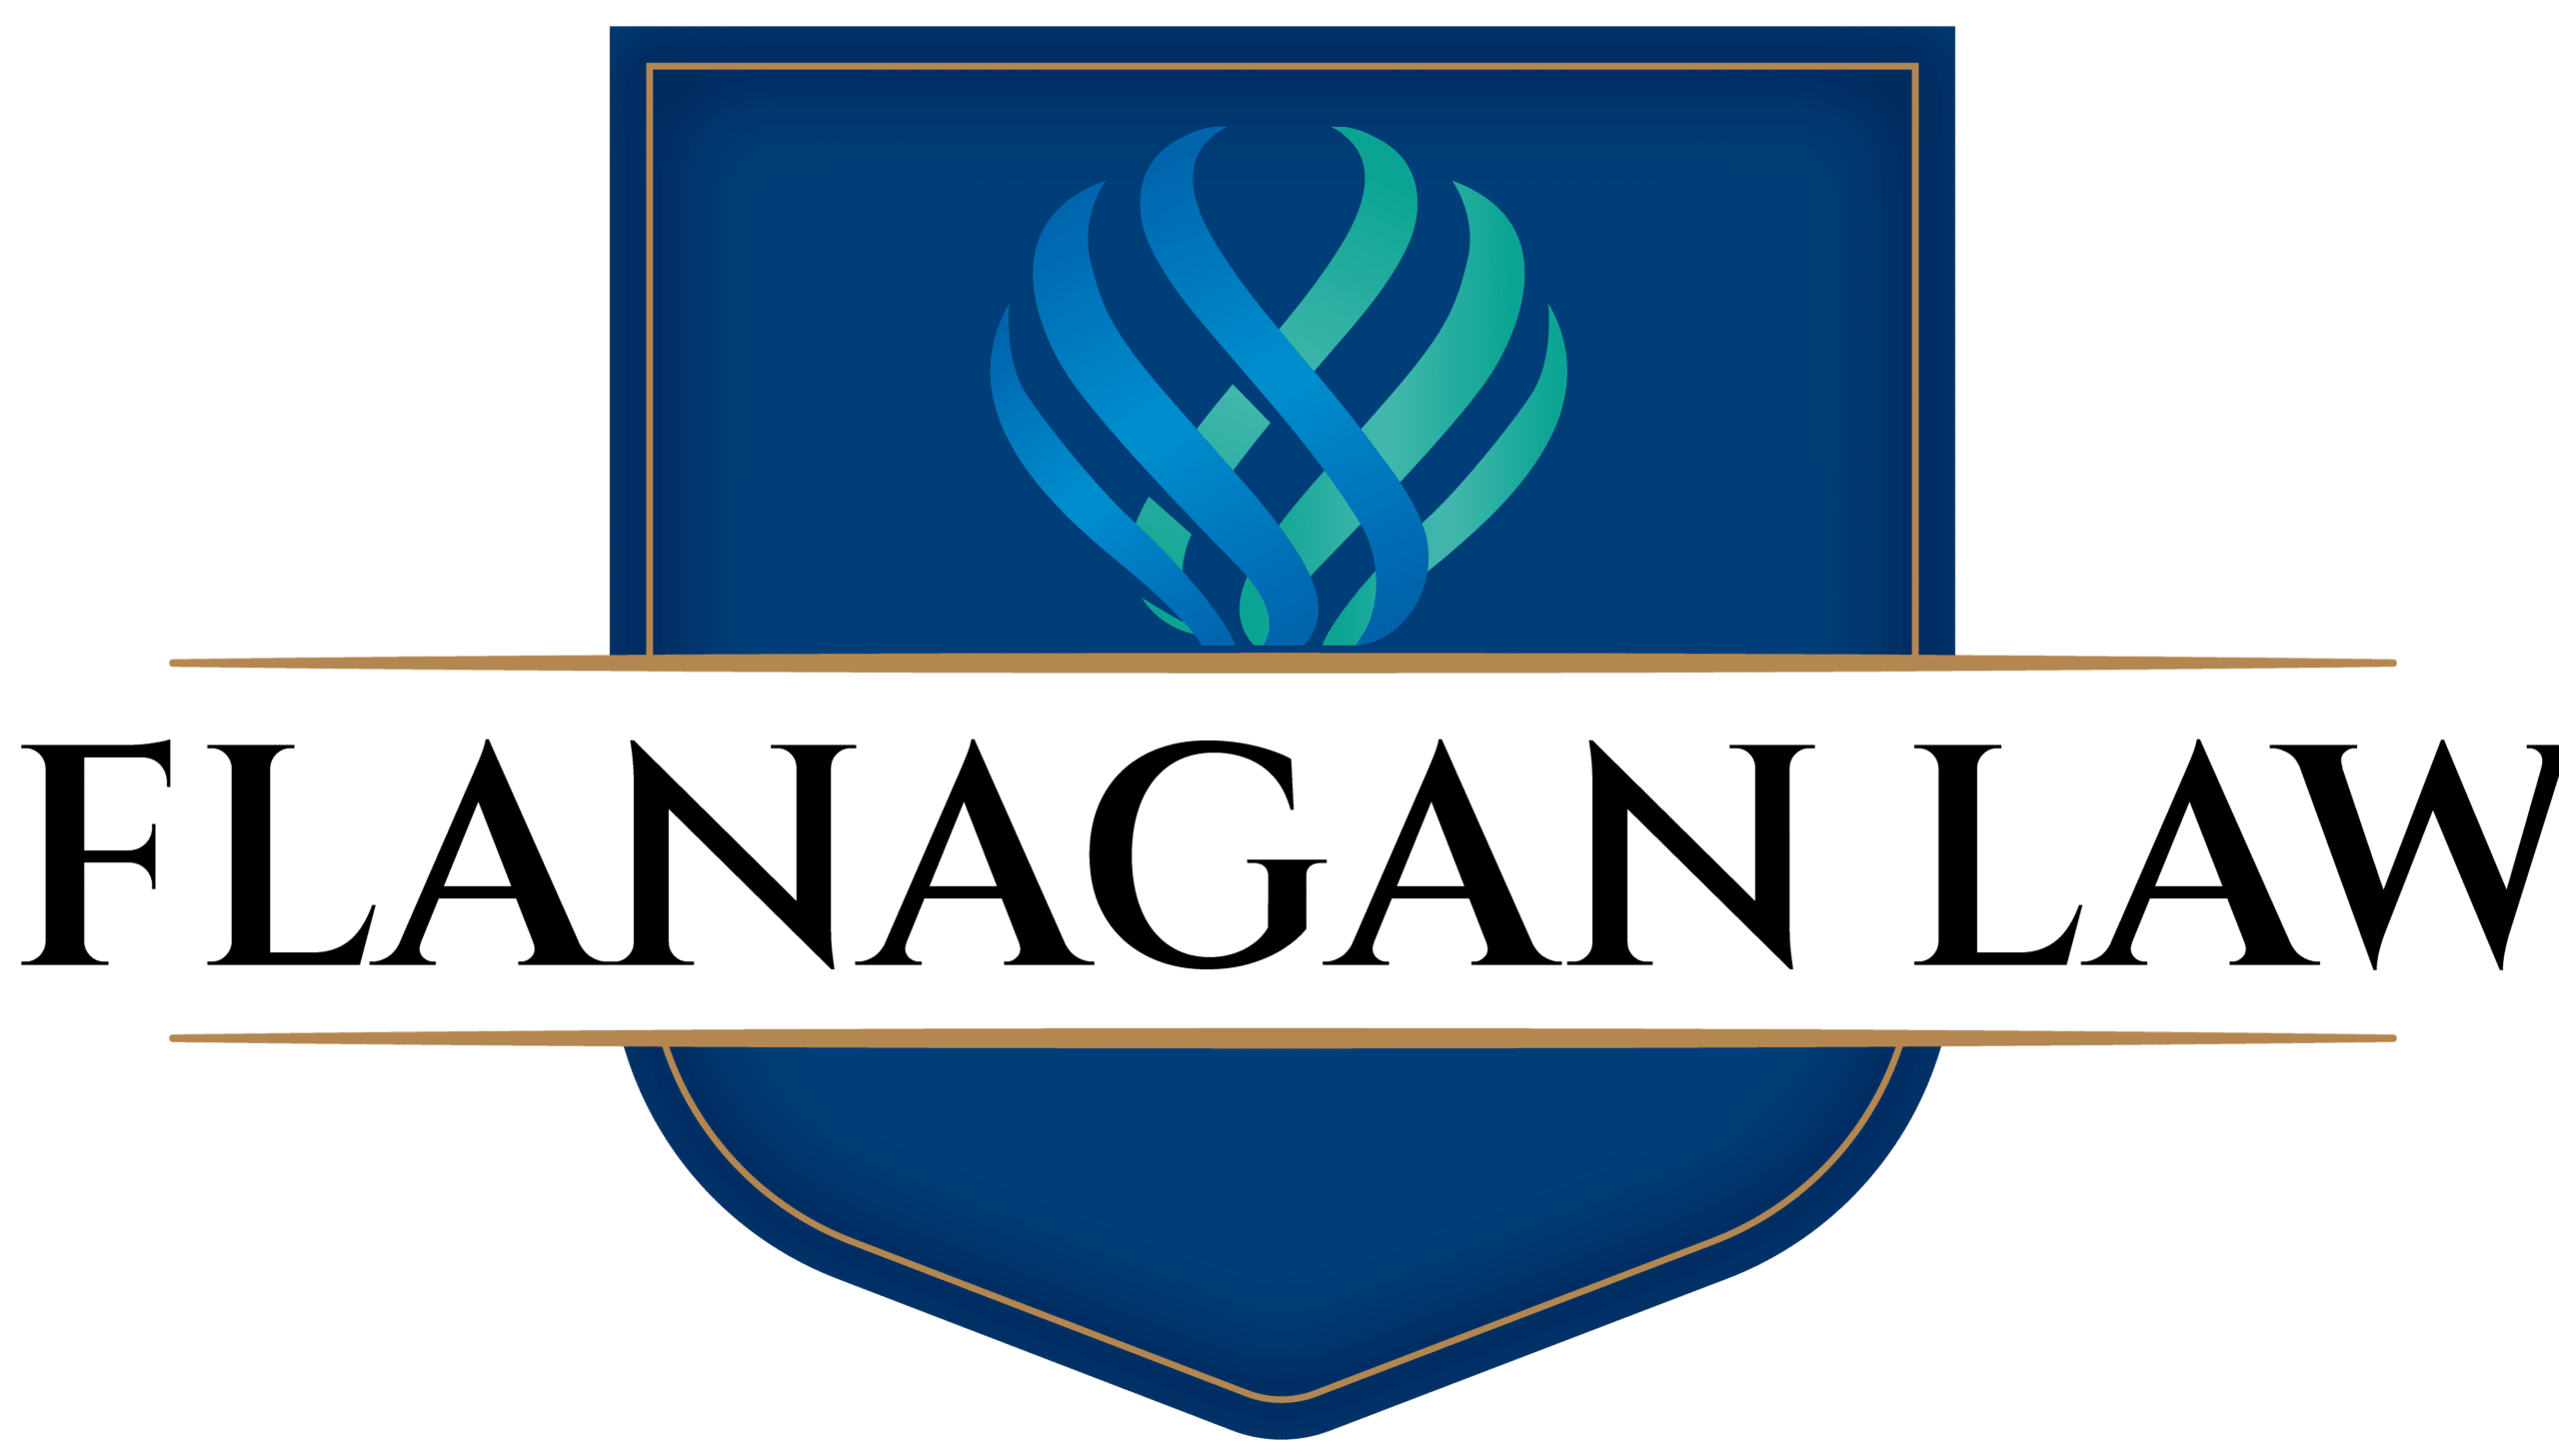 Flanagan Law